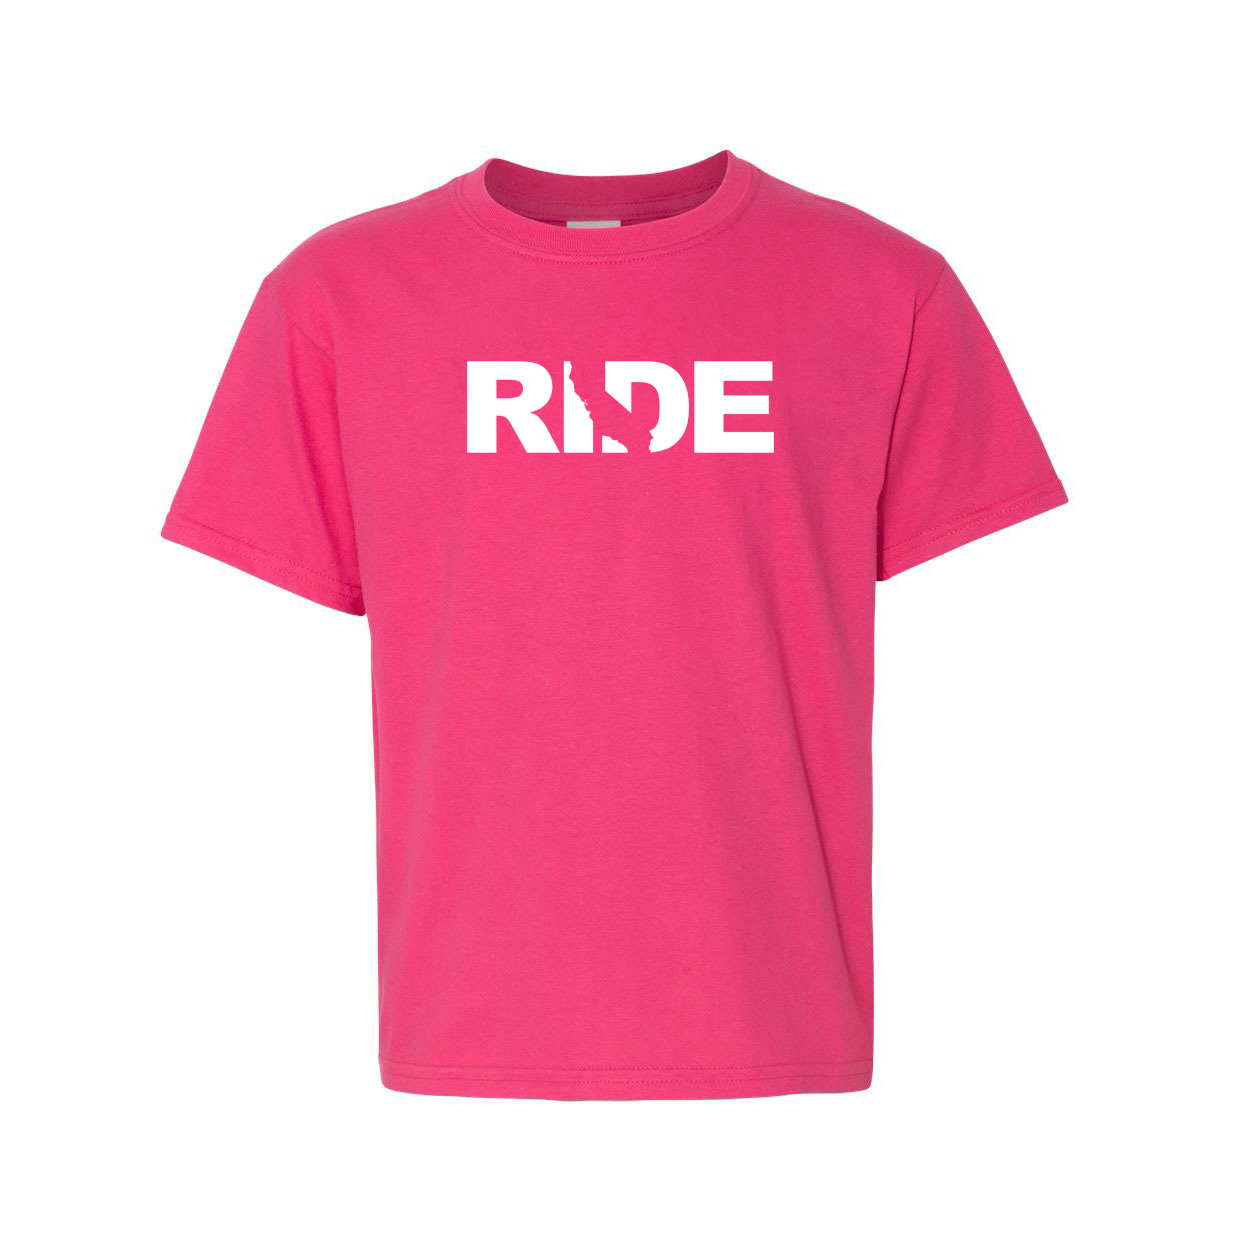 Ride California Classic Youth T-Shirt Pink